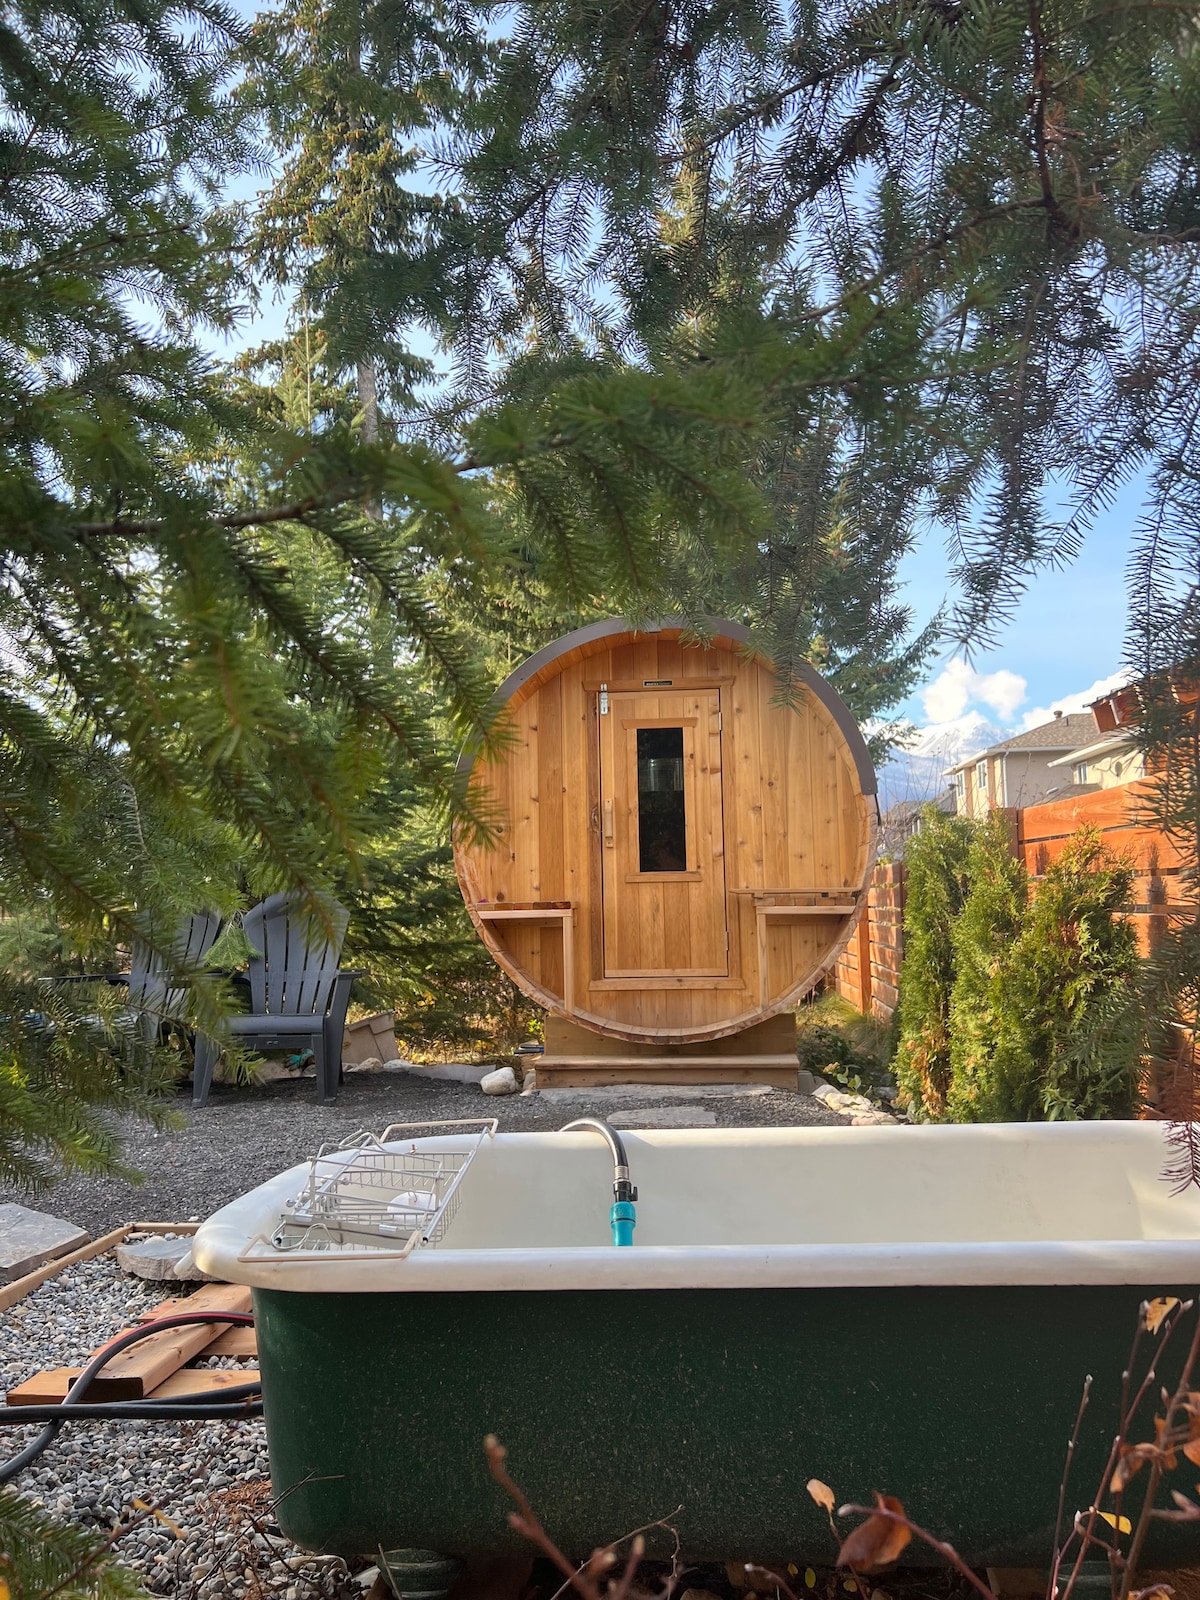 Mount 7 Nordic Sanctuary: Sauna, Hot Tub, Views